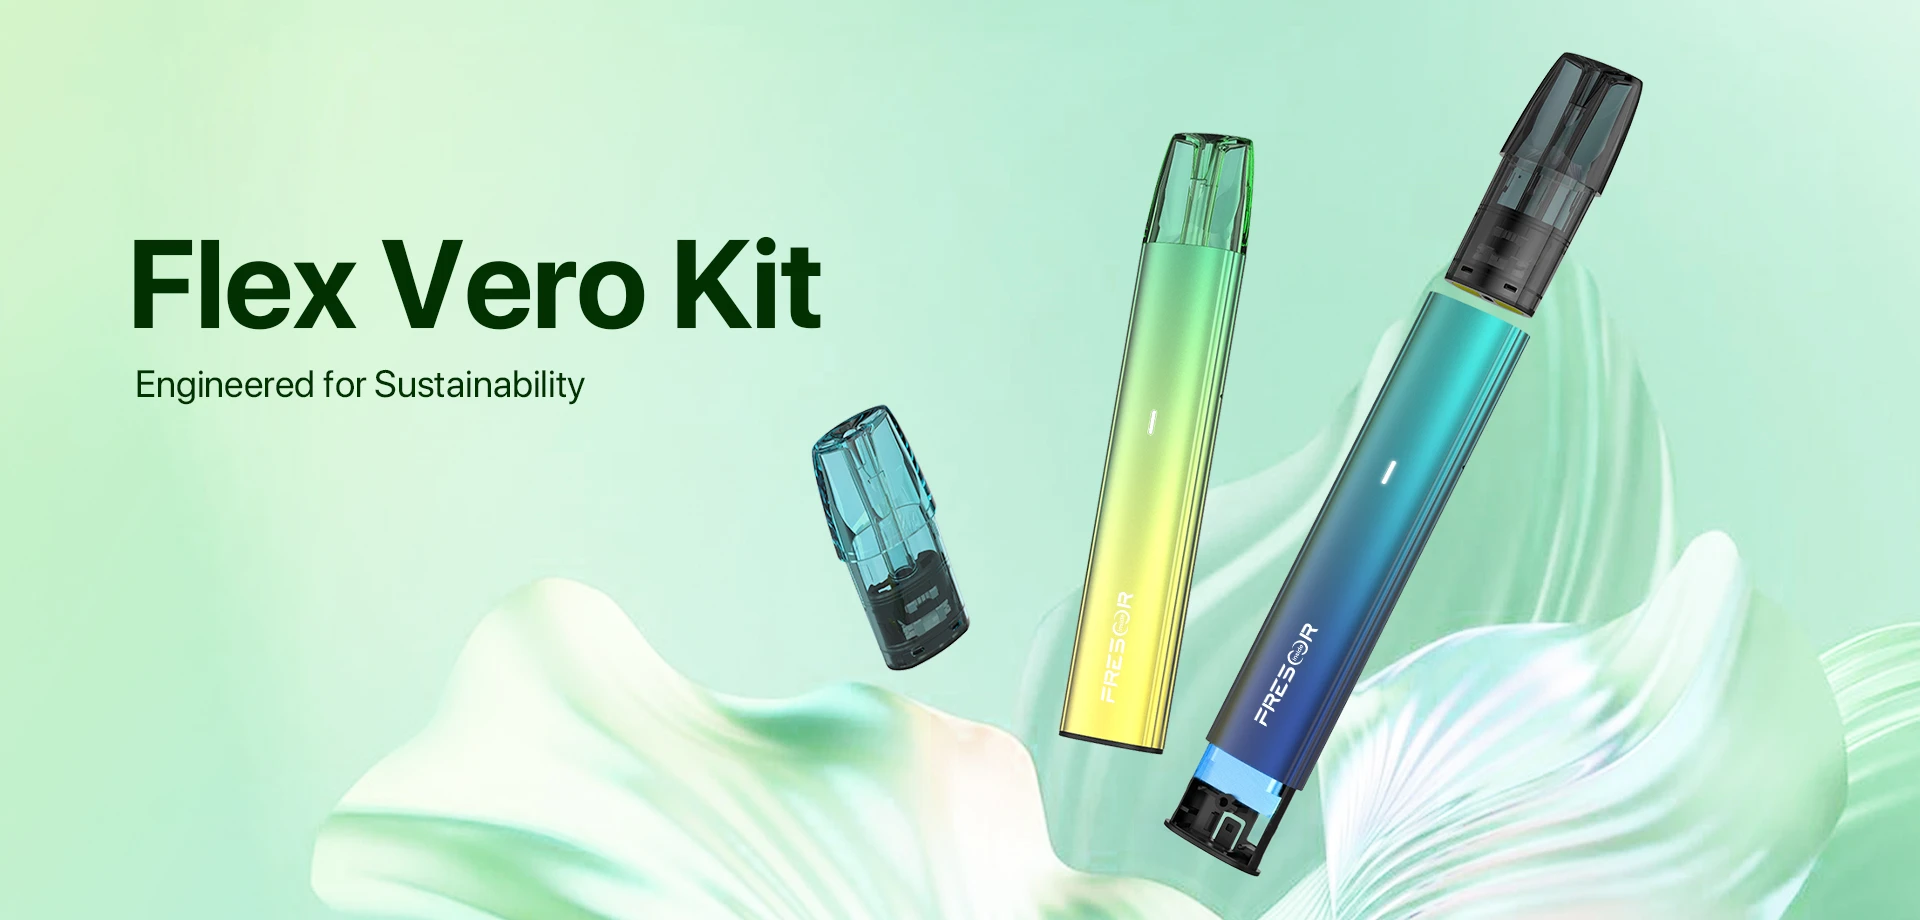 Flex Vero Kit Engineered for Sustainability